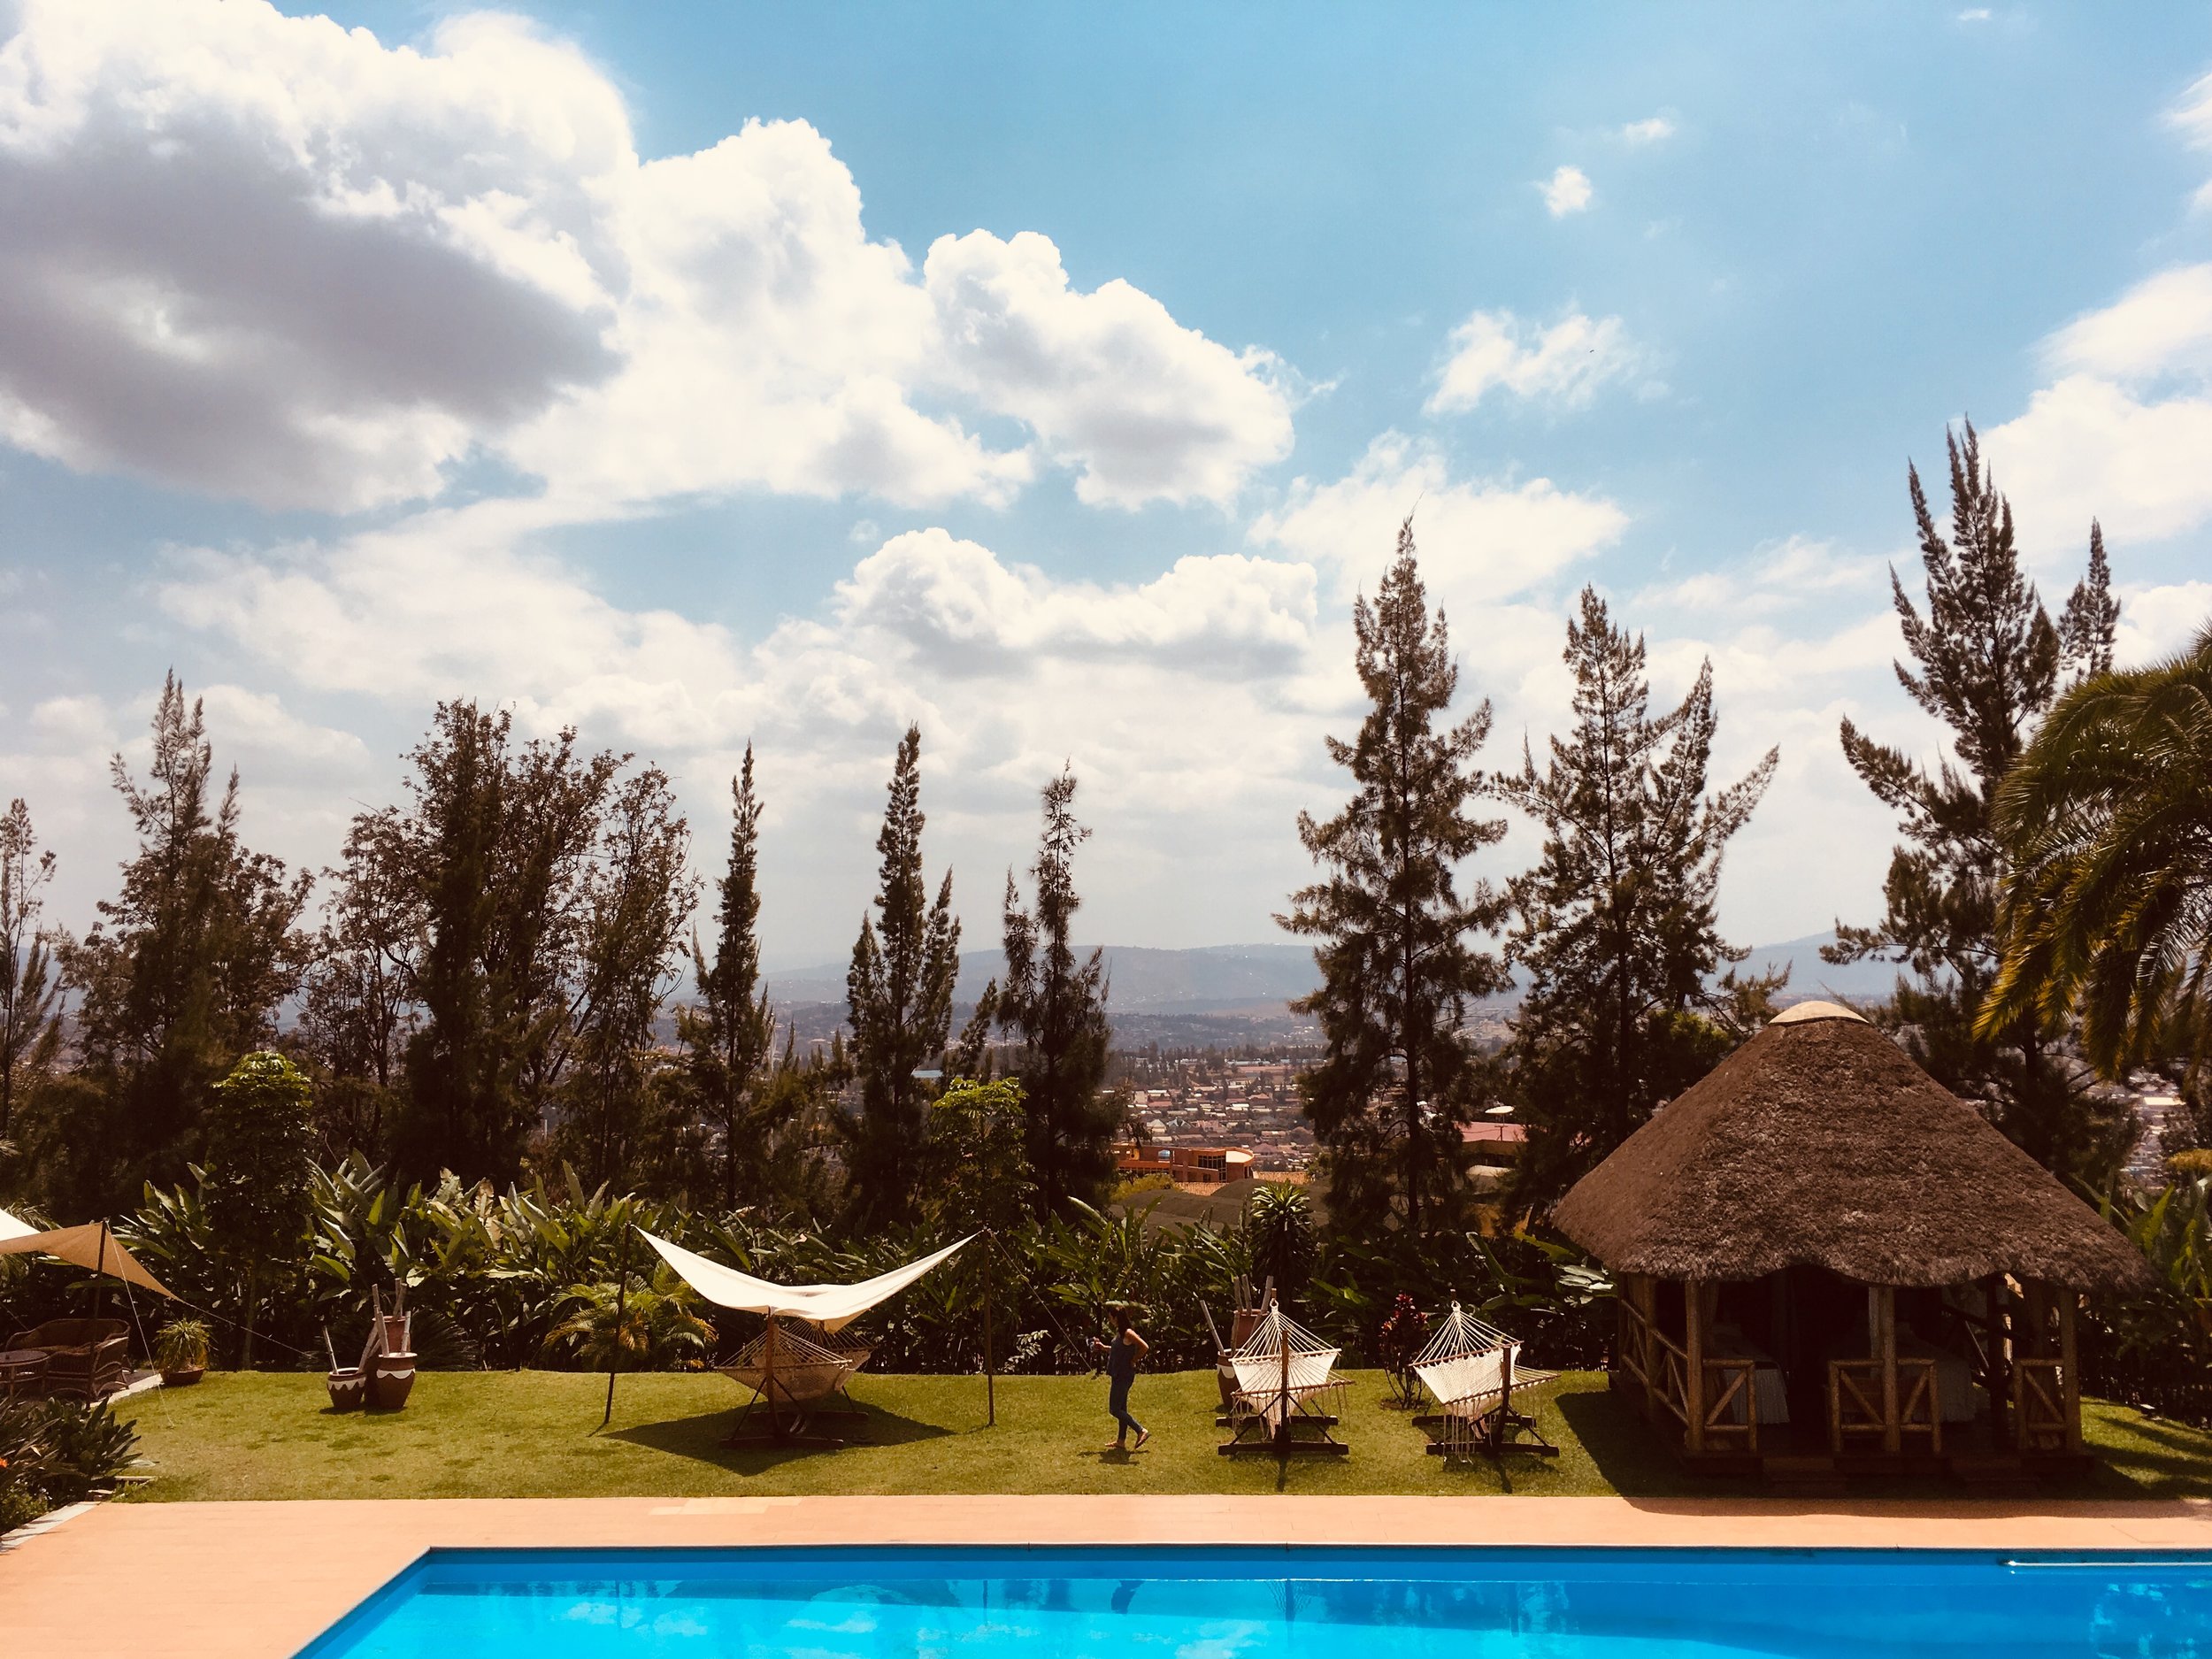 Milles Collines Hotel poolside Kigali